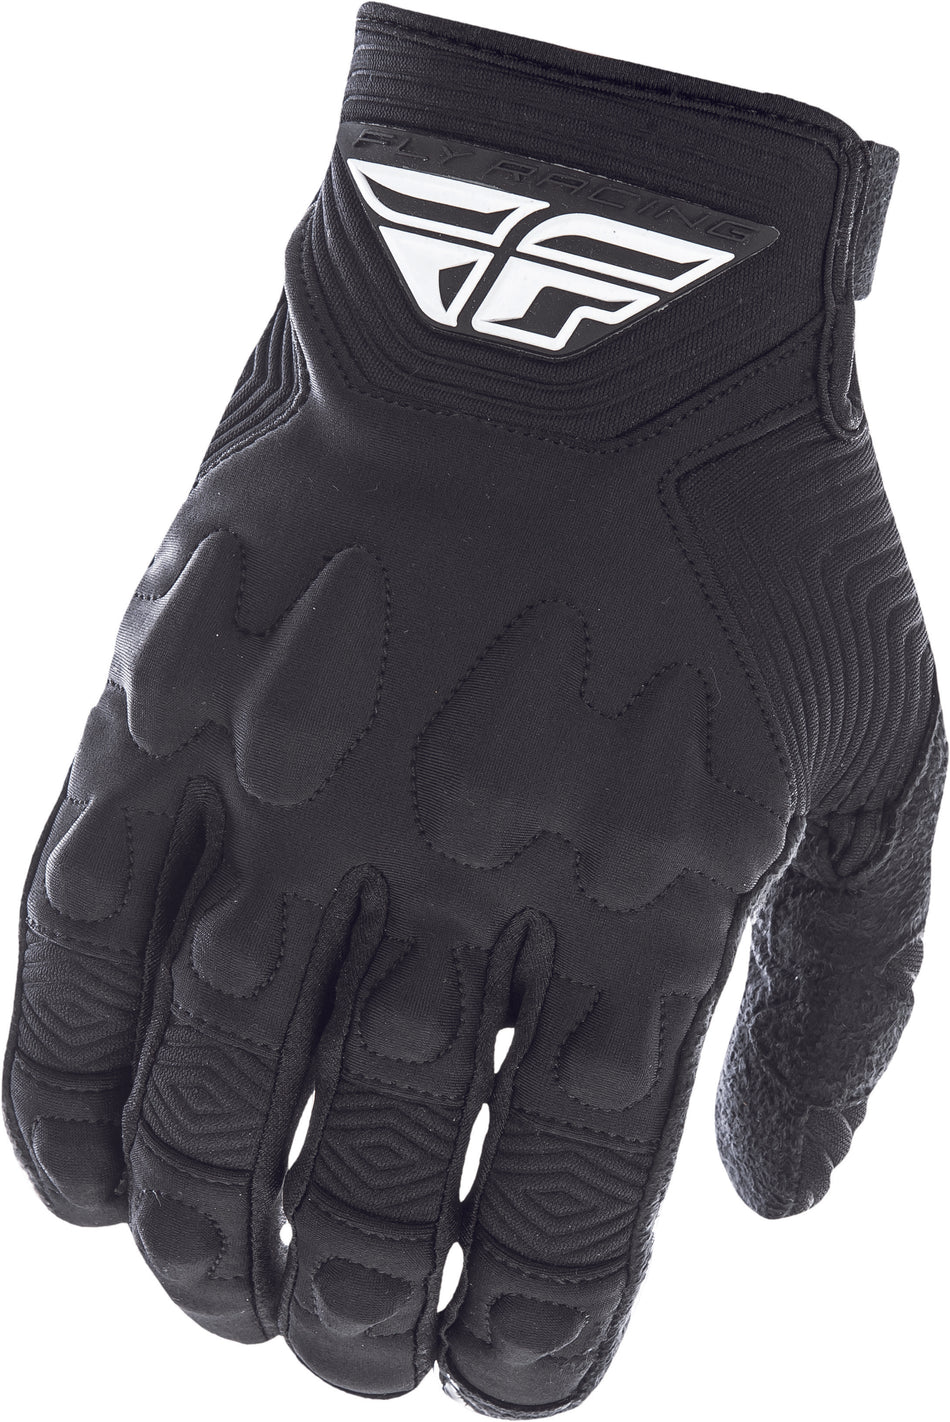 FLY RACING Patrol Xc Lite Gloves Black Sz 08 370-67008